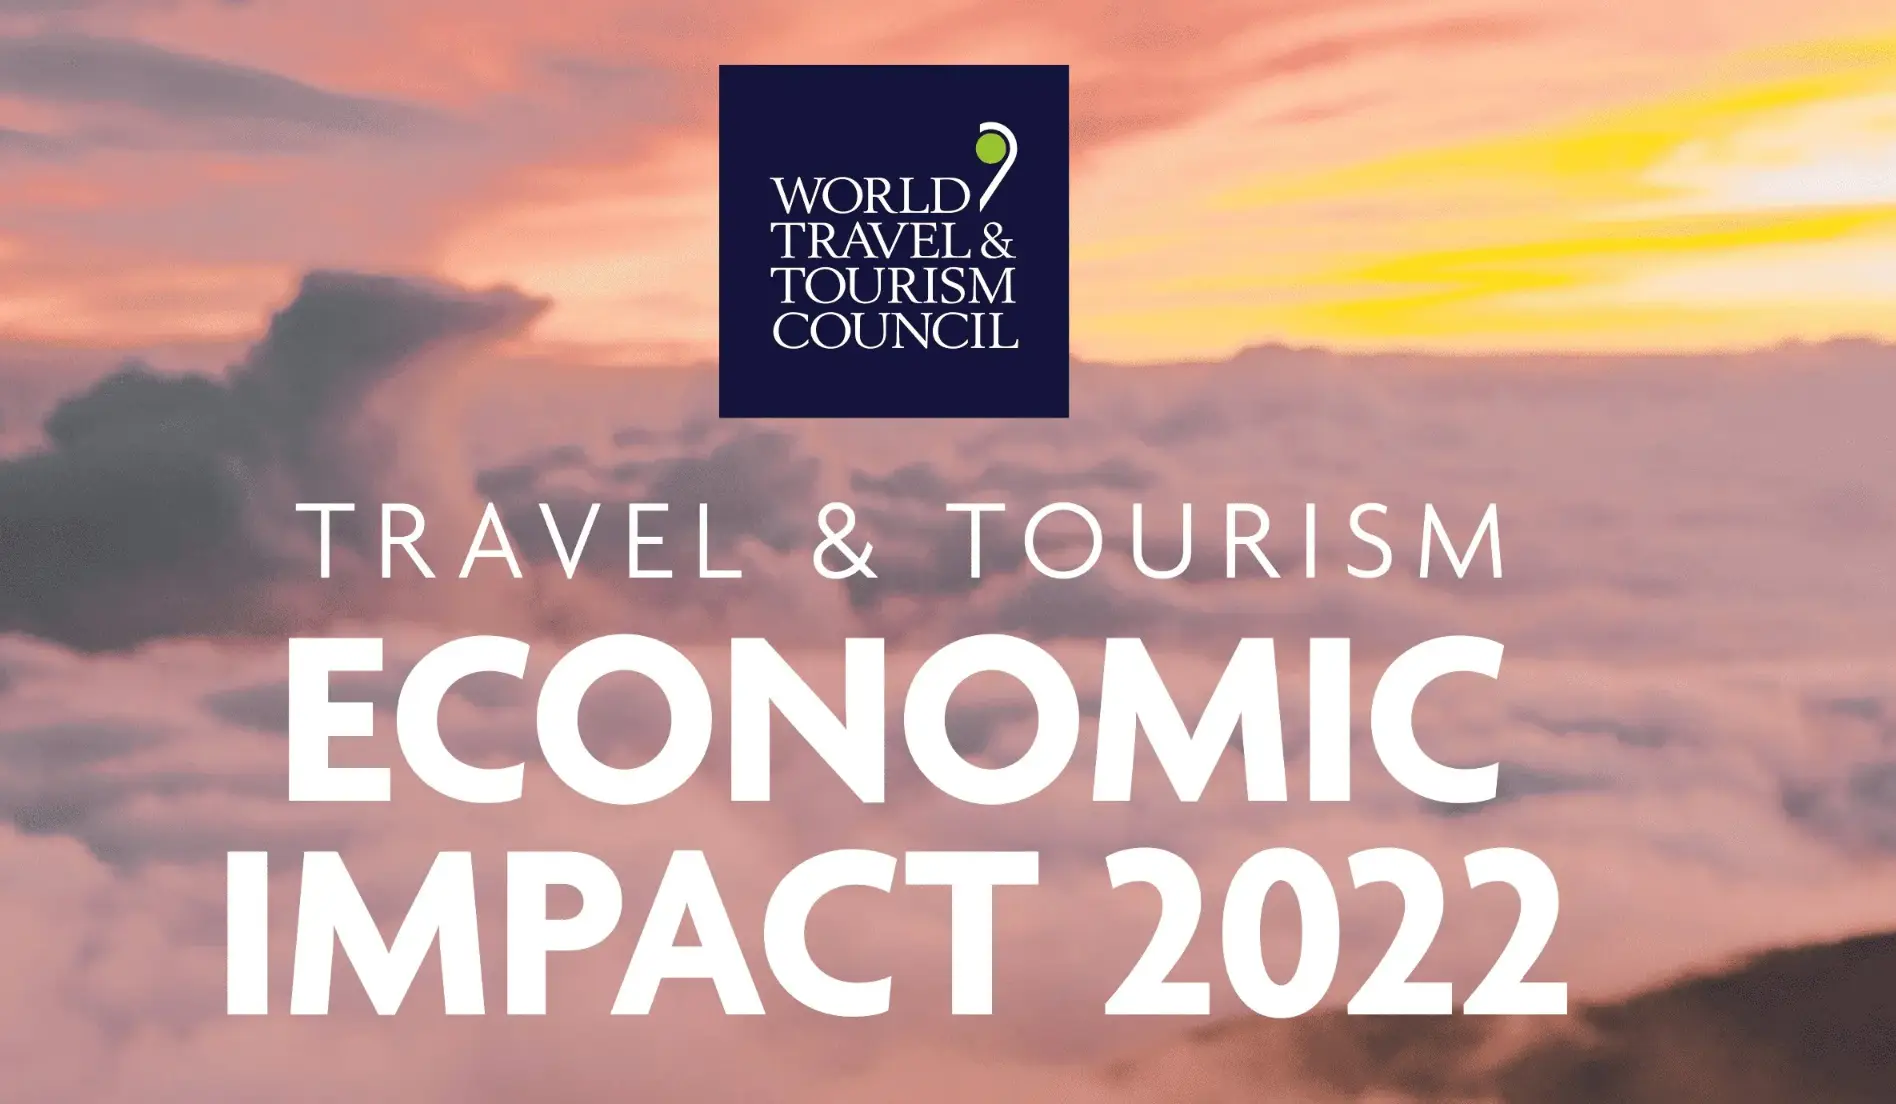 the world travel & tourism council